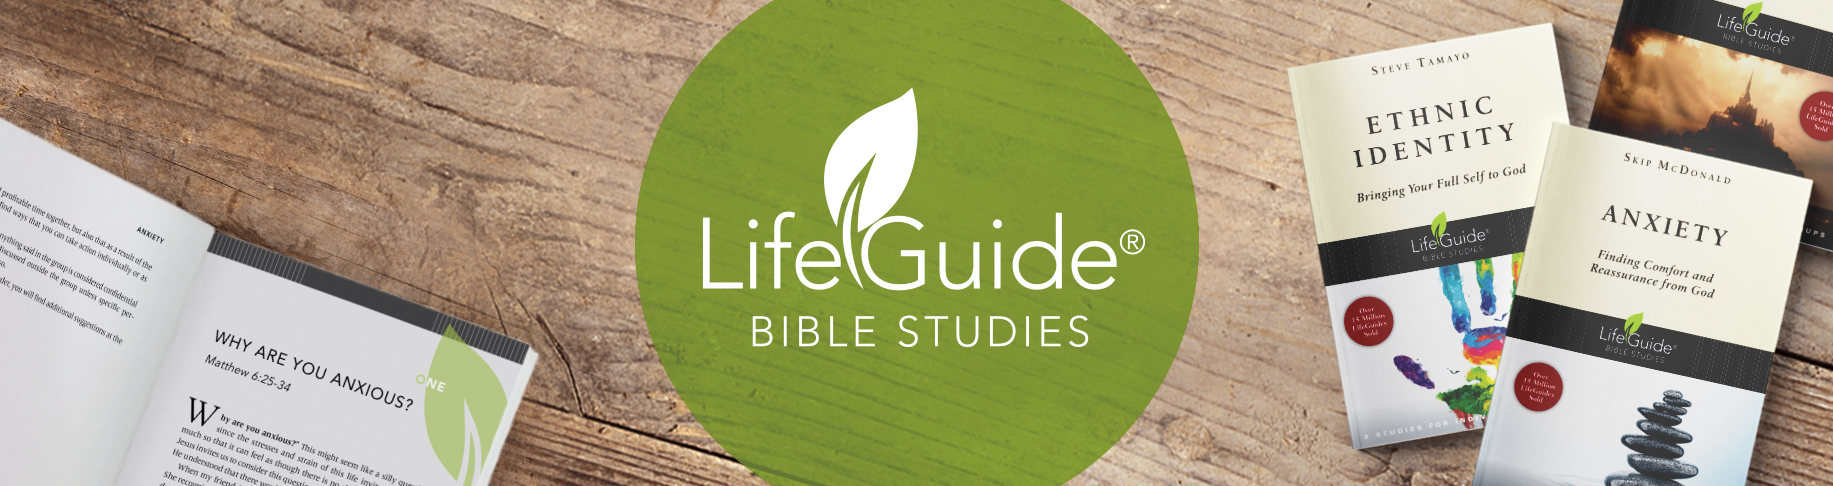 LifeGuide Bible Studies